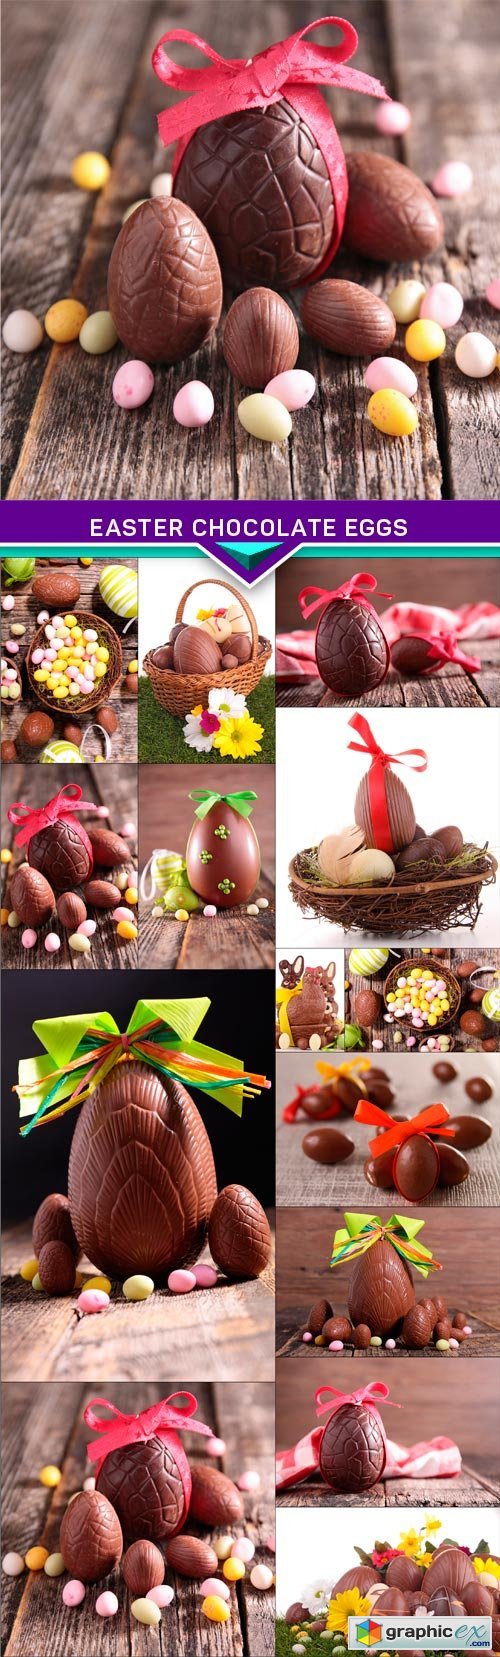 Easter chocolate eggs 14x JPEG